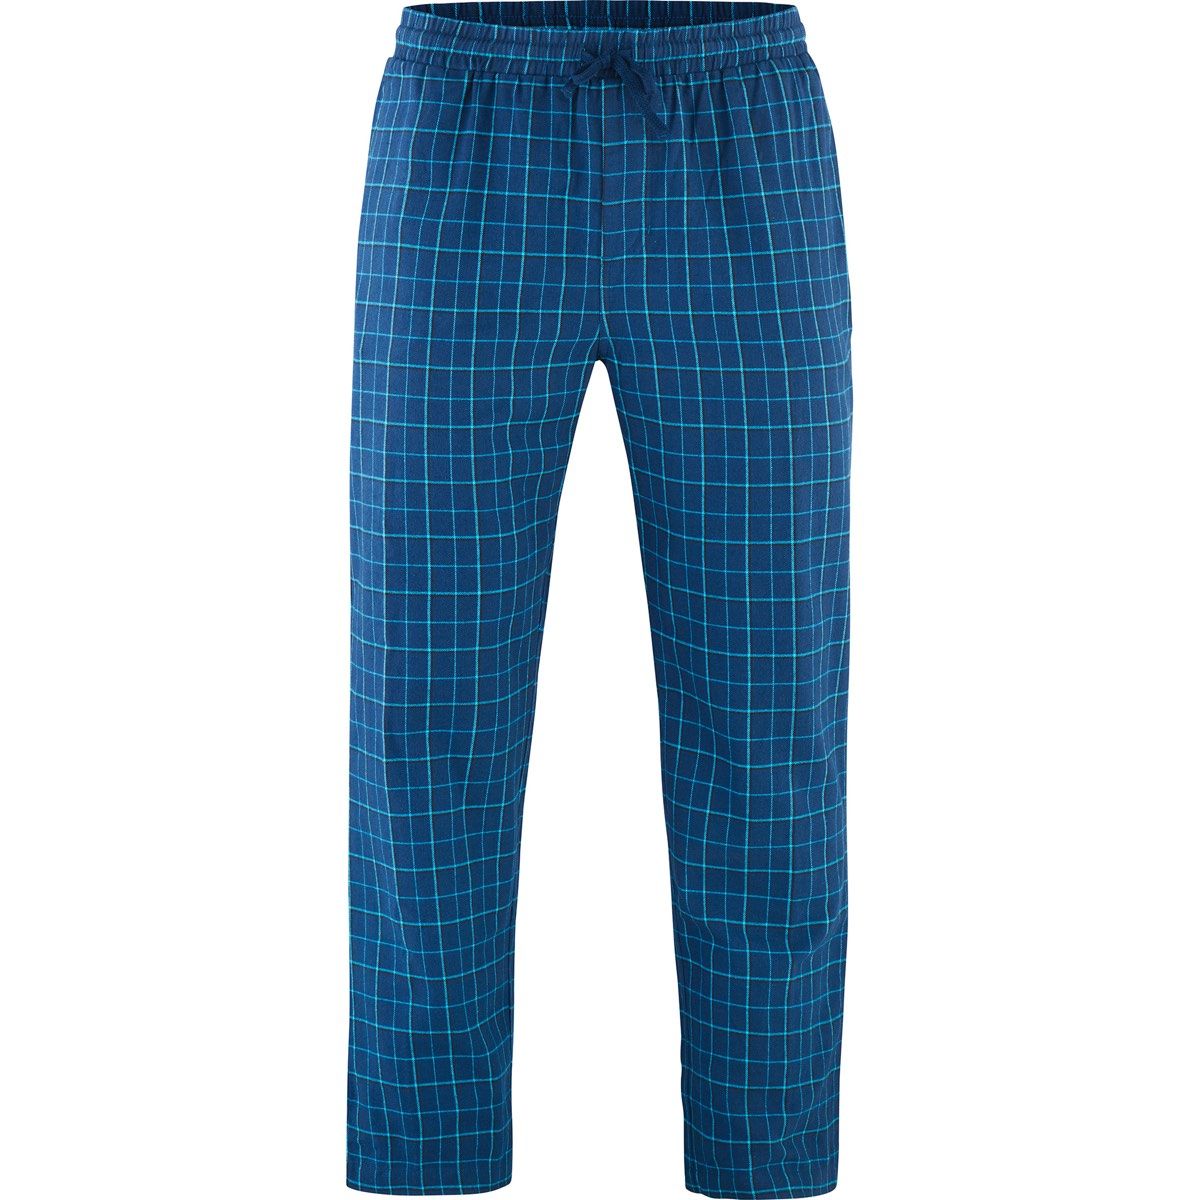 Bula Checked Pyjamas Pants Scuba